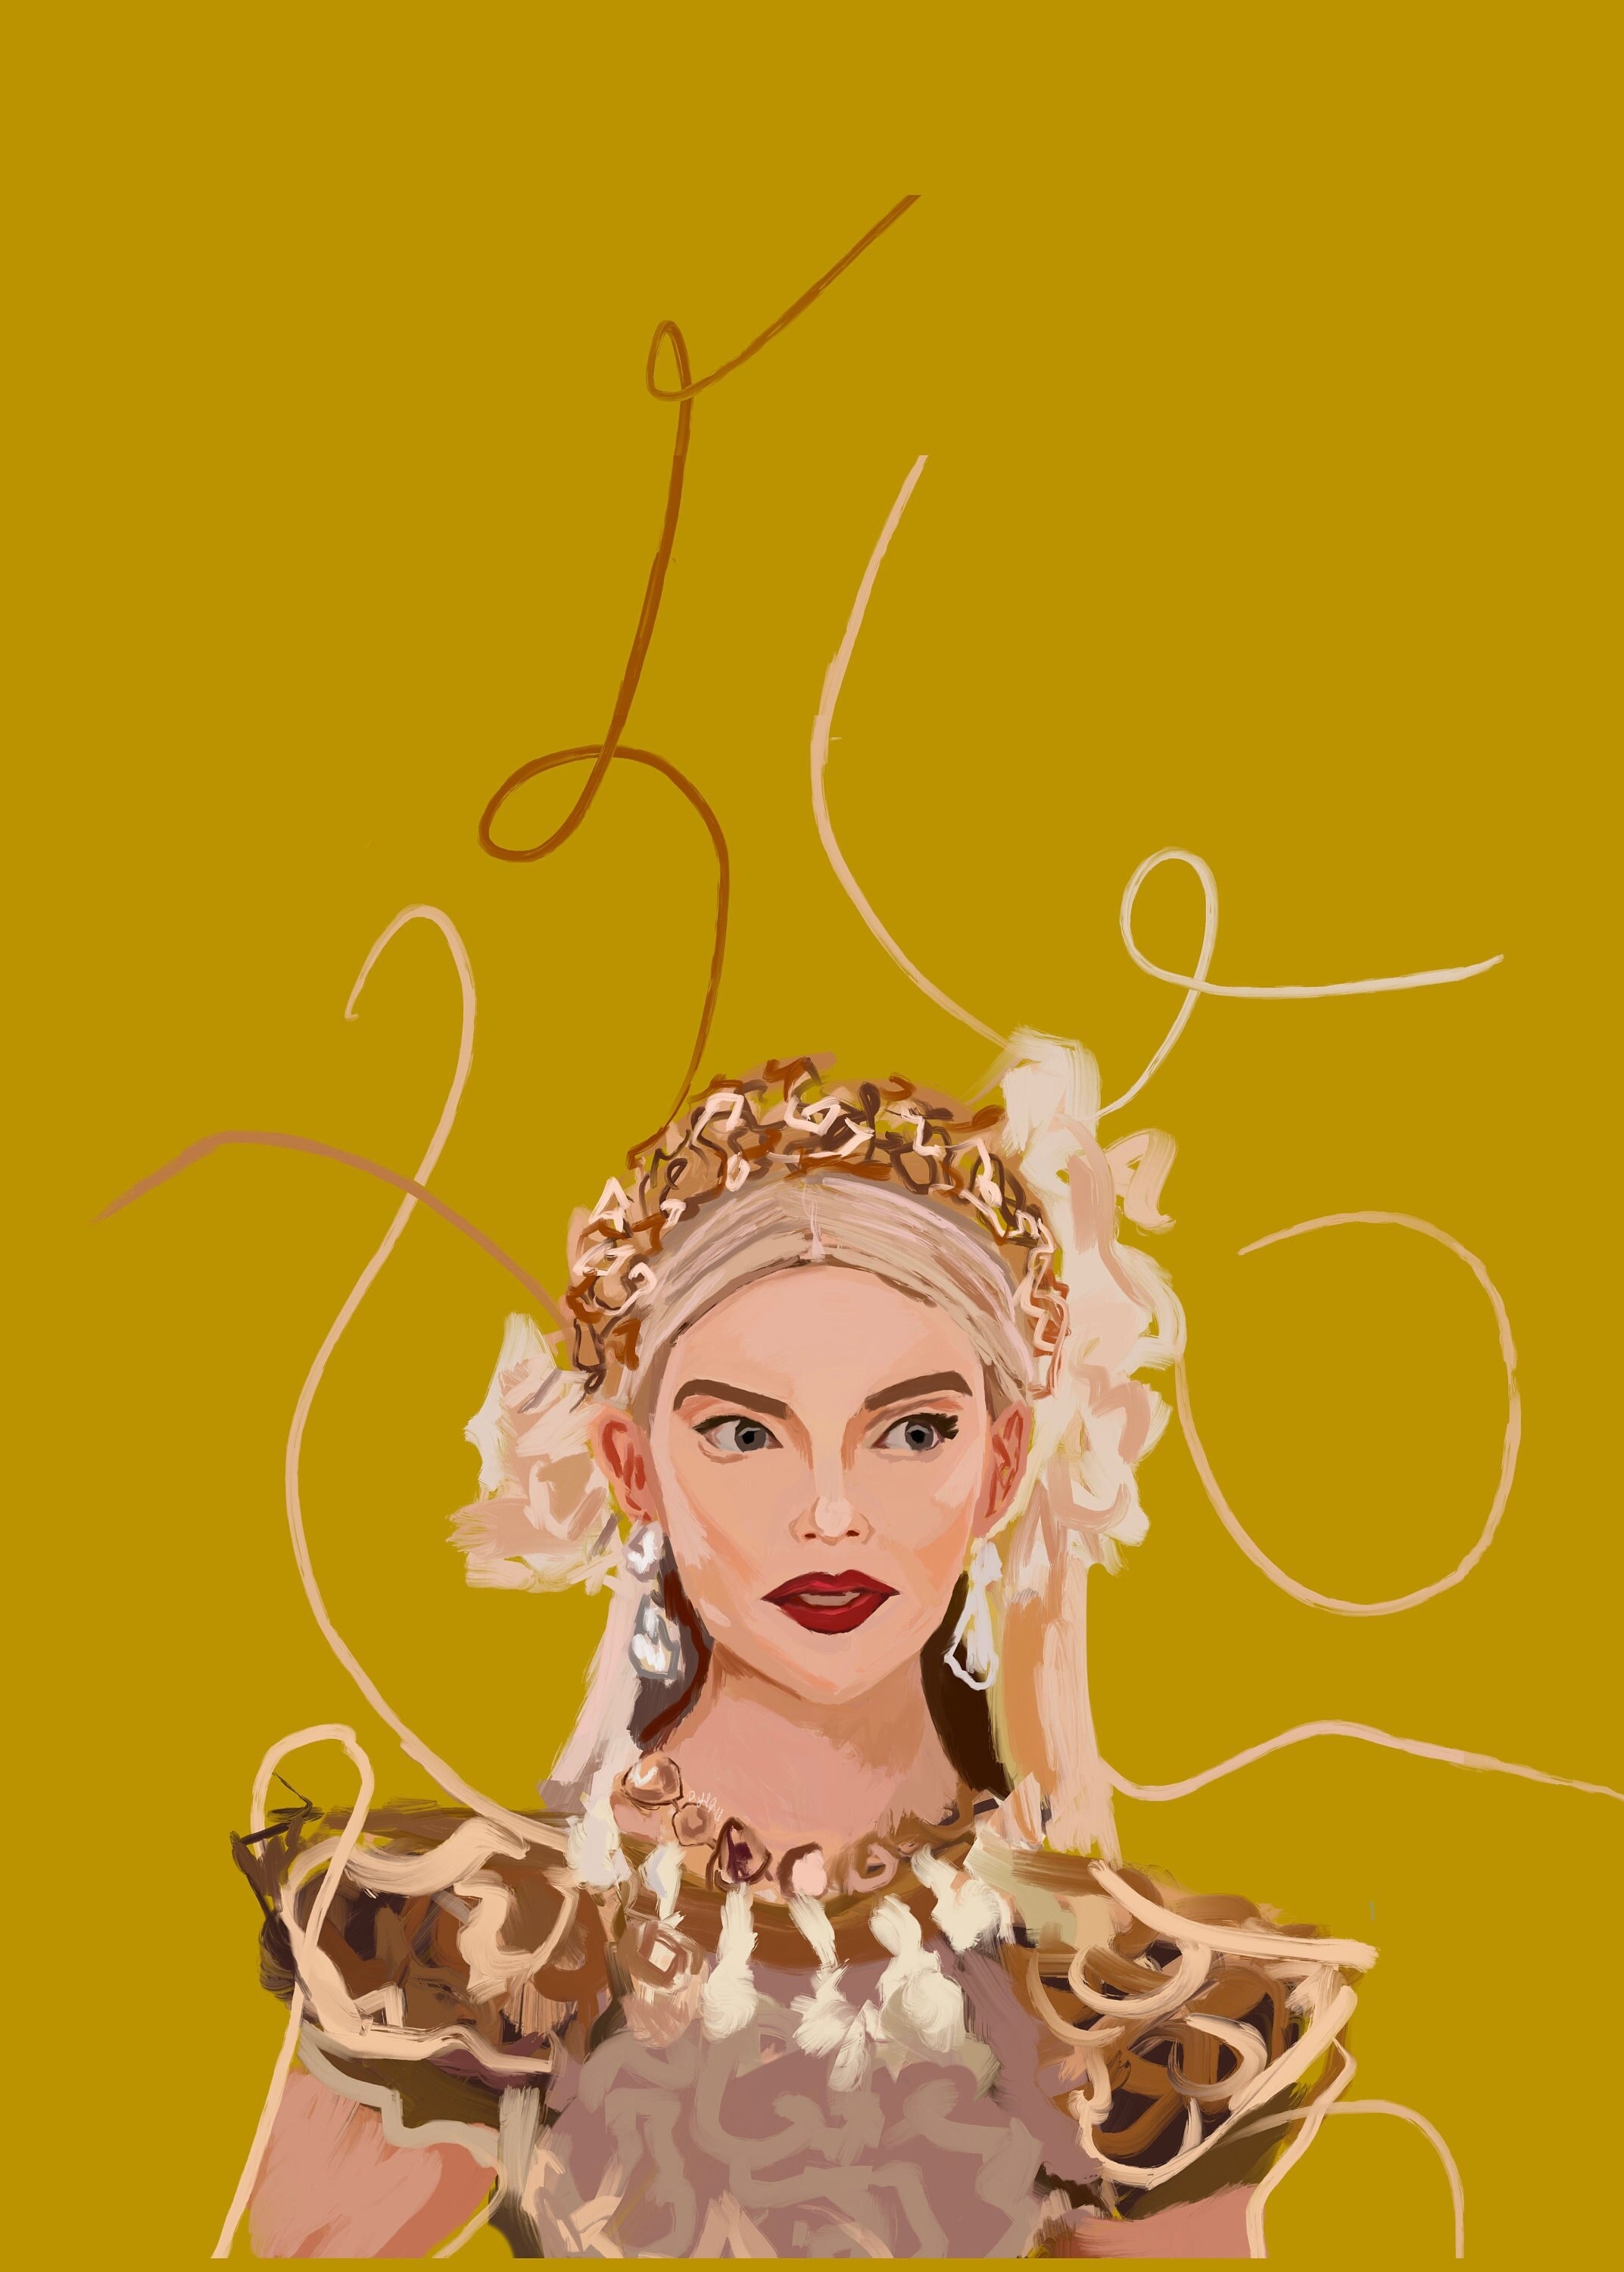 Beth Harmon  Anya Taylor-Joy Poster for Sale by zaykovadesigns